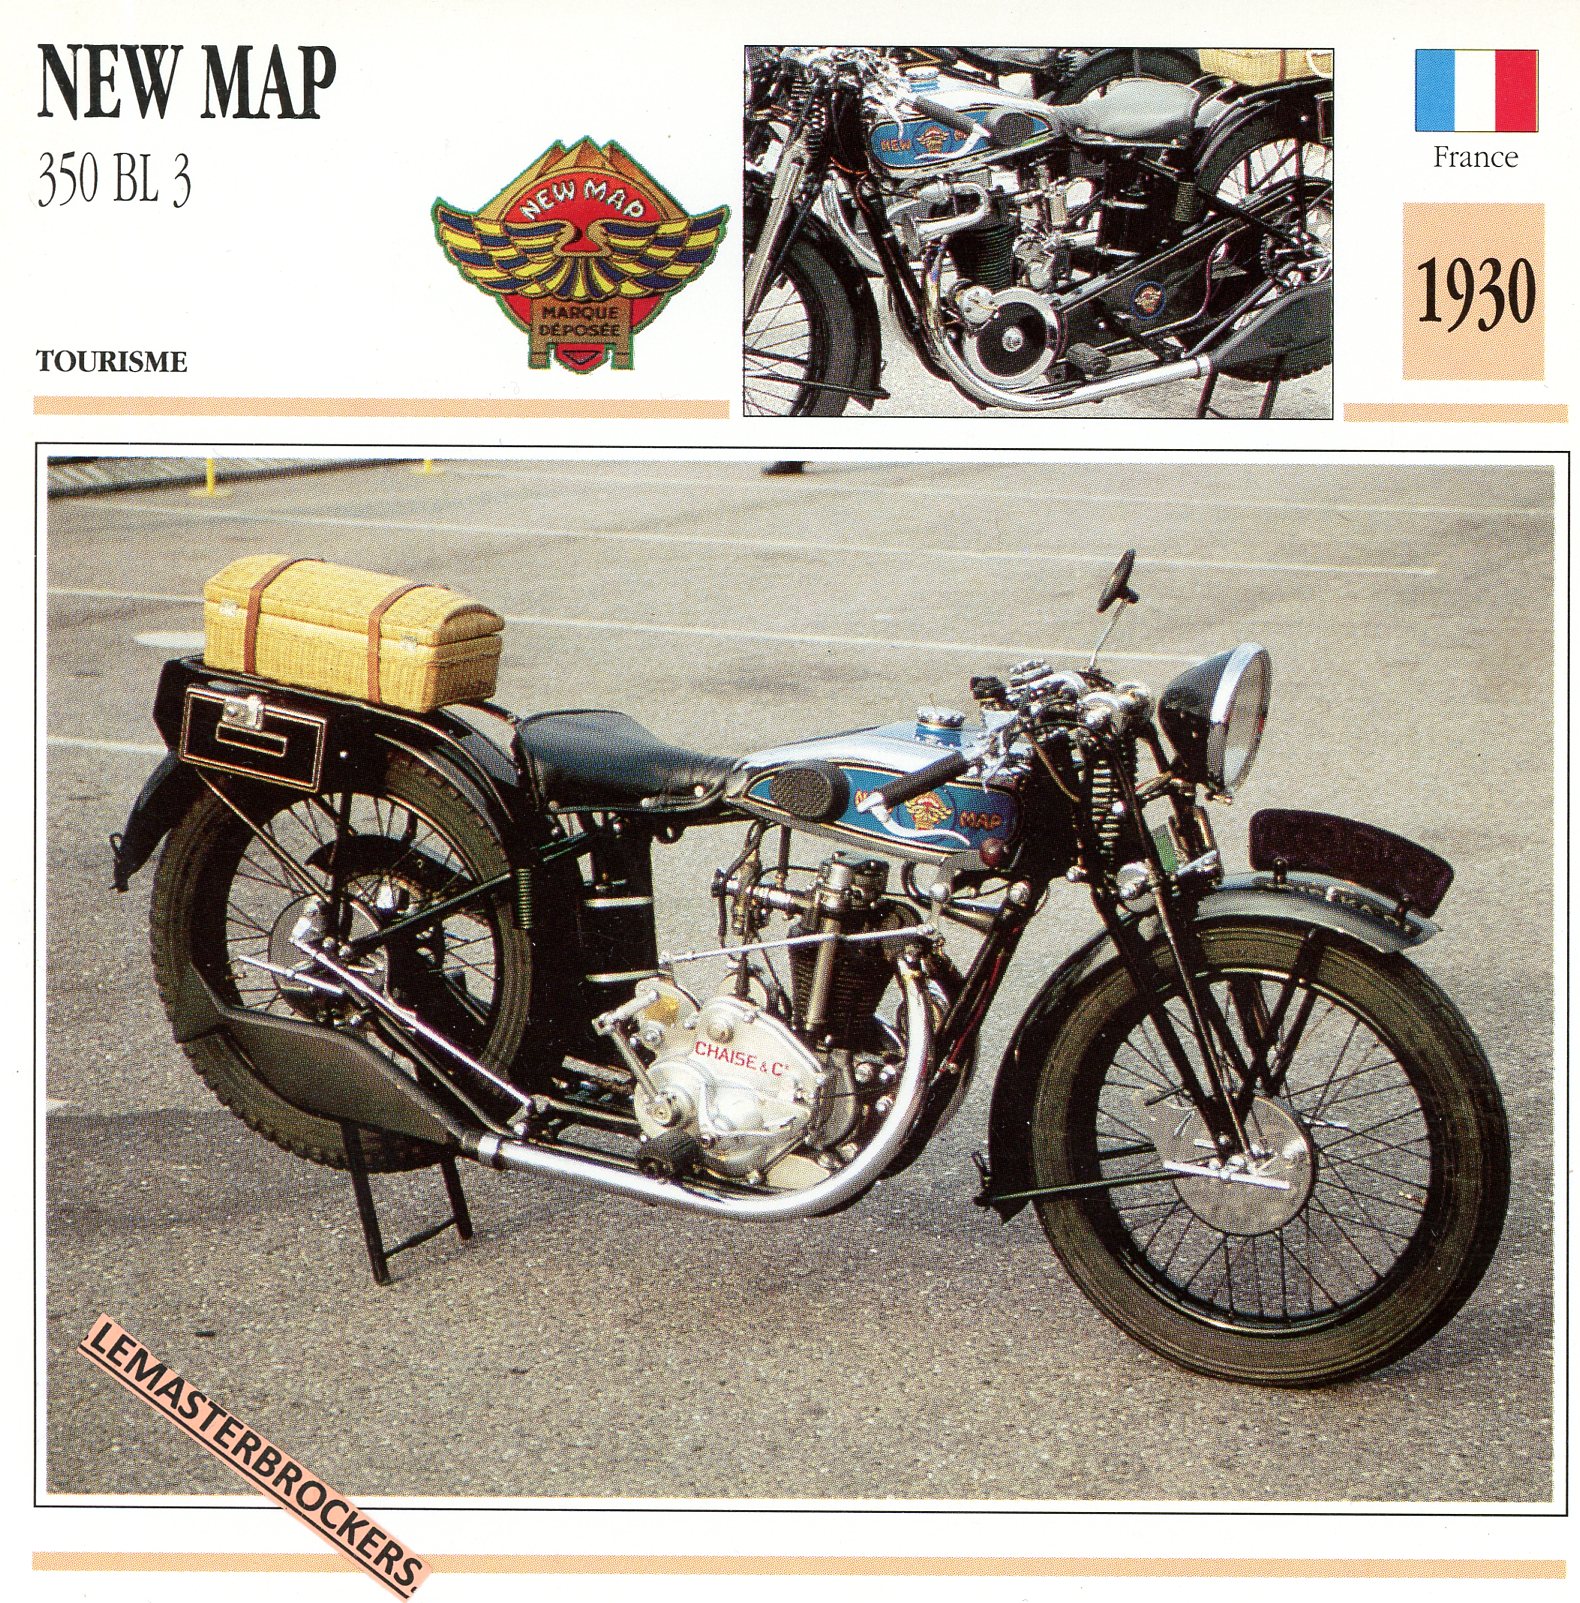 NEW-MPA-BL3-1960-NEWMAP-FICHE-MOTO-ATLAS-lemasterbrockers-CARD-MOTORCYCLE